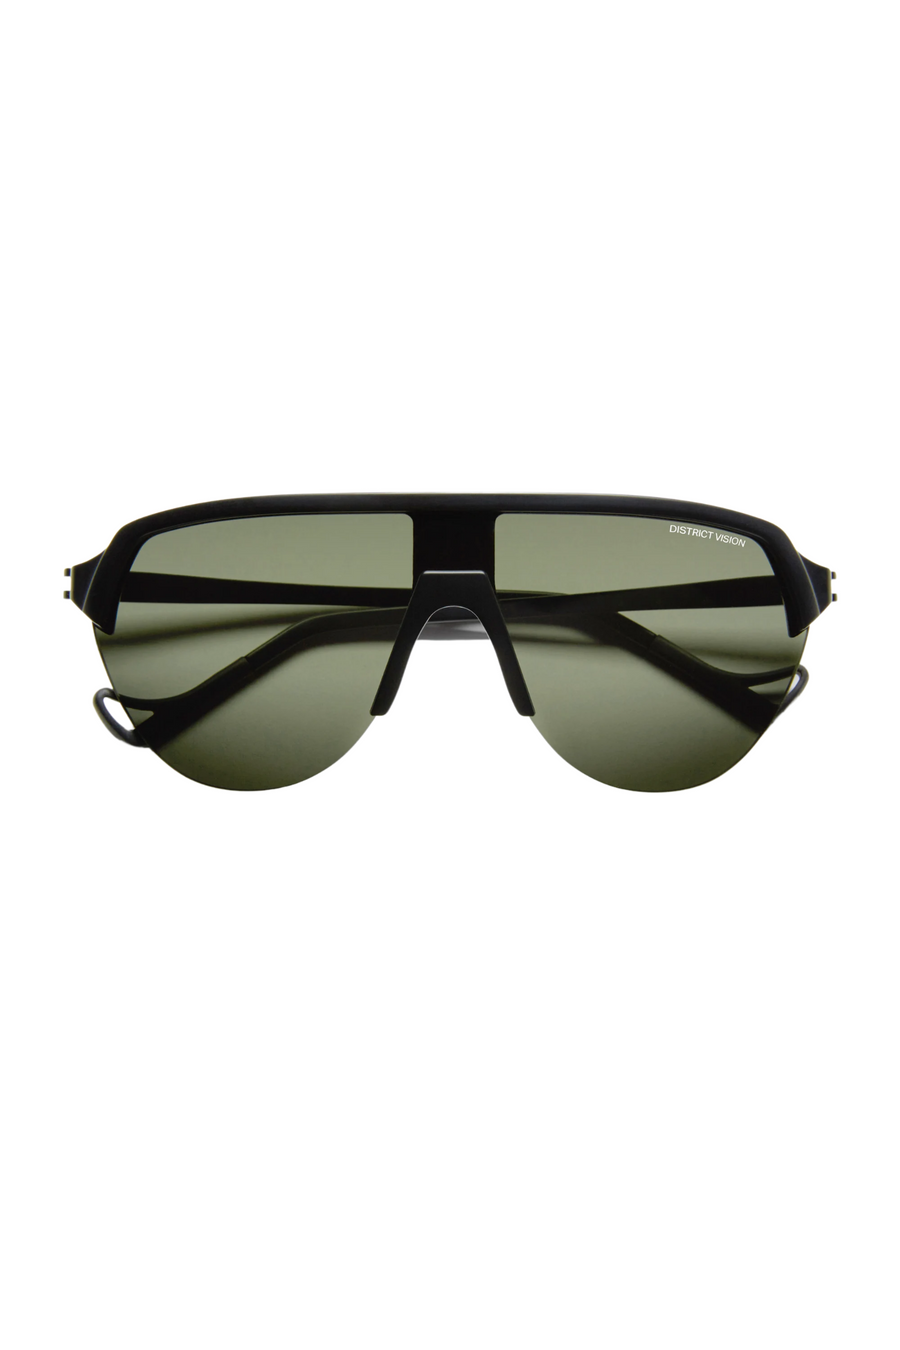 Sunglasses Nagata Speed Blade Black/G15